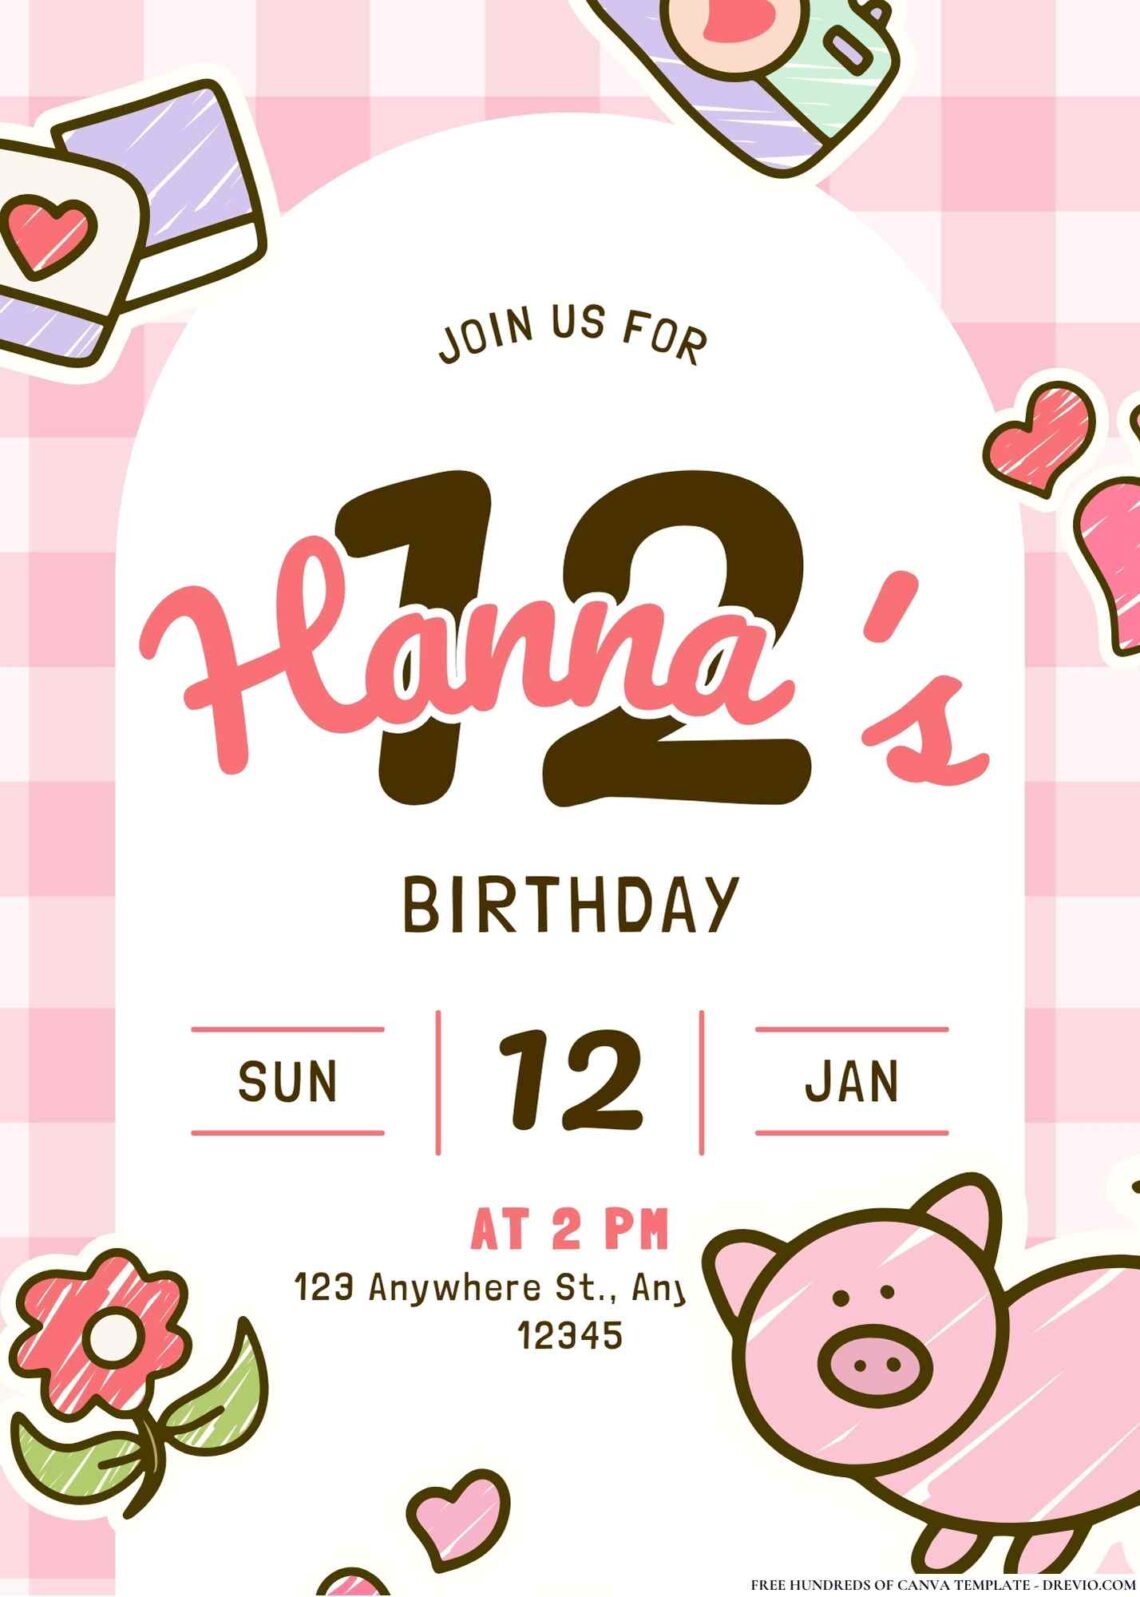 FREE Pink Birthday Invitations